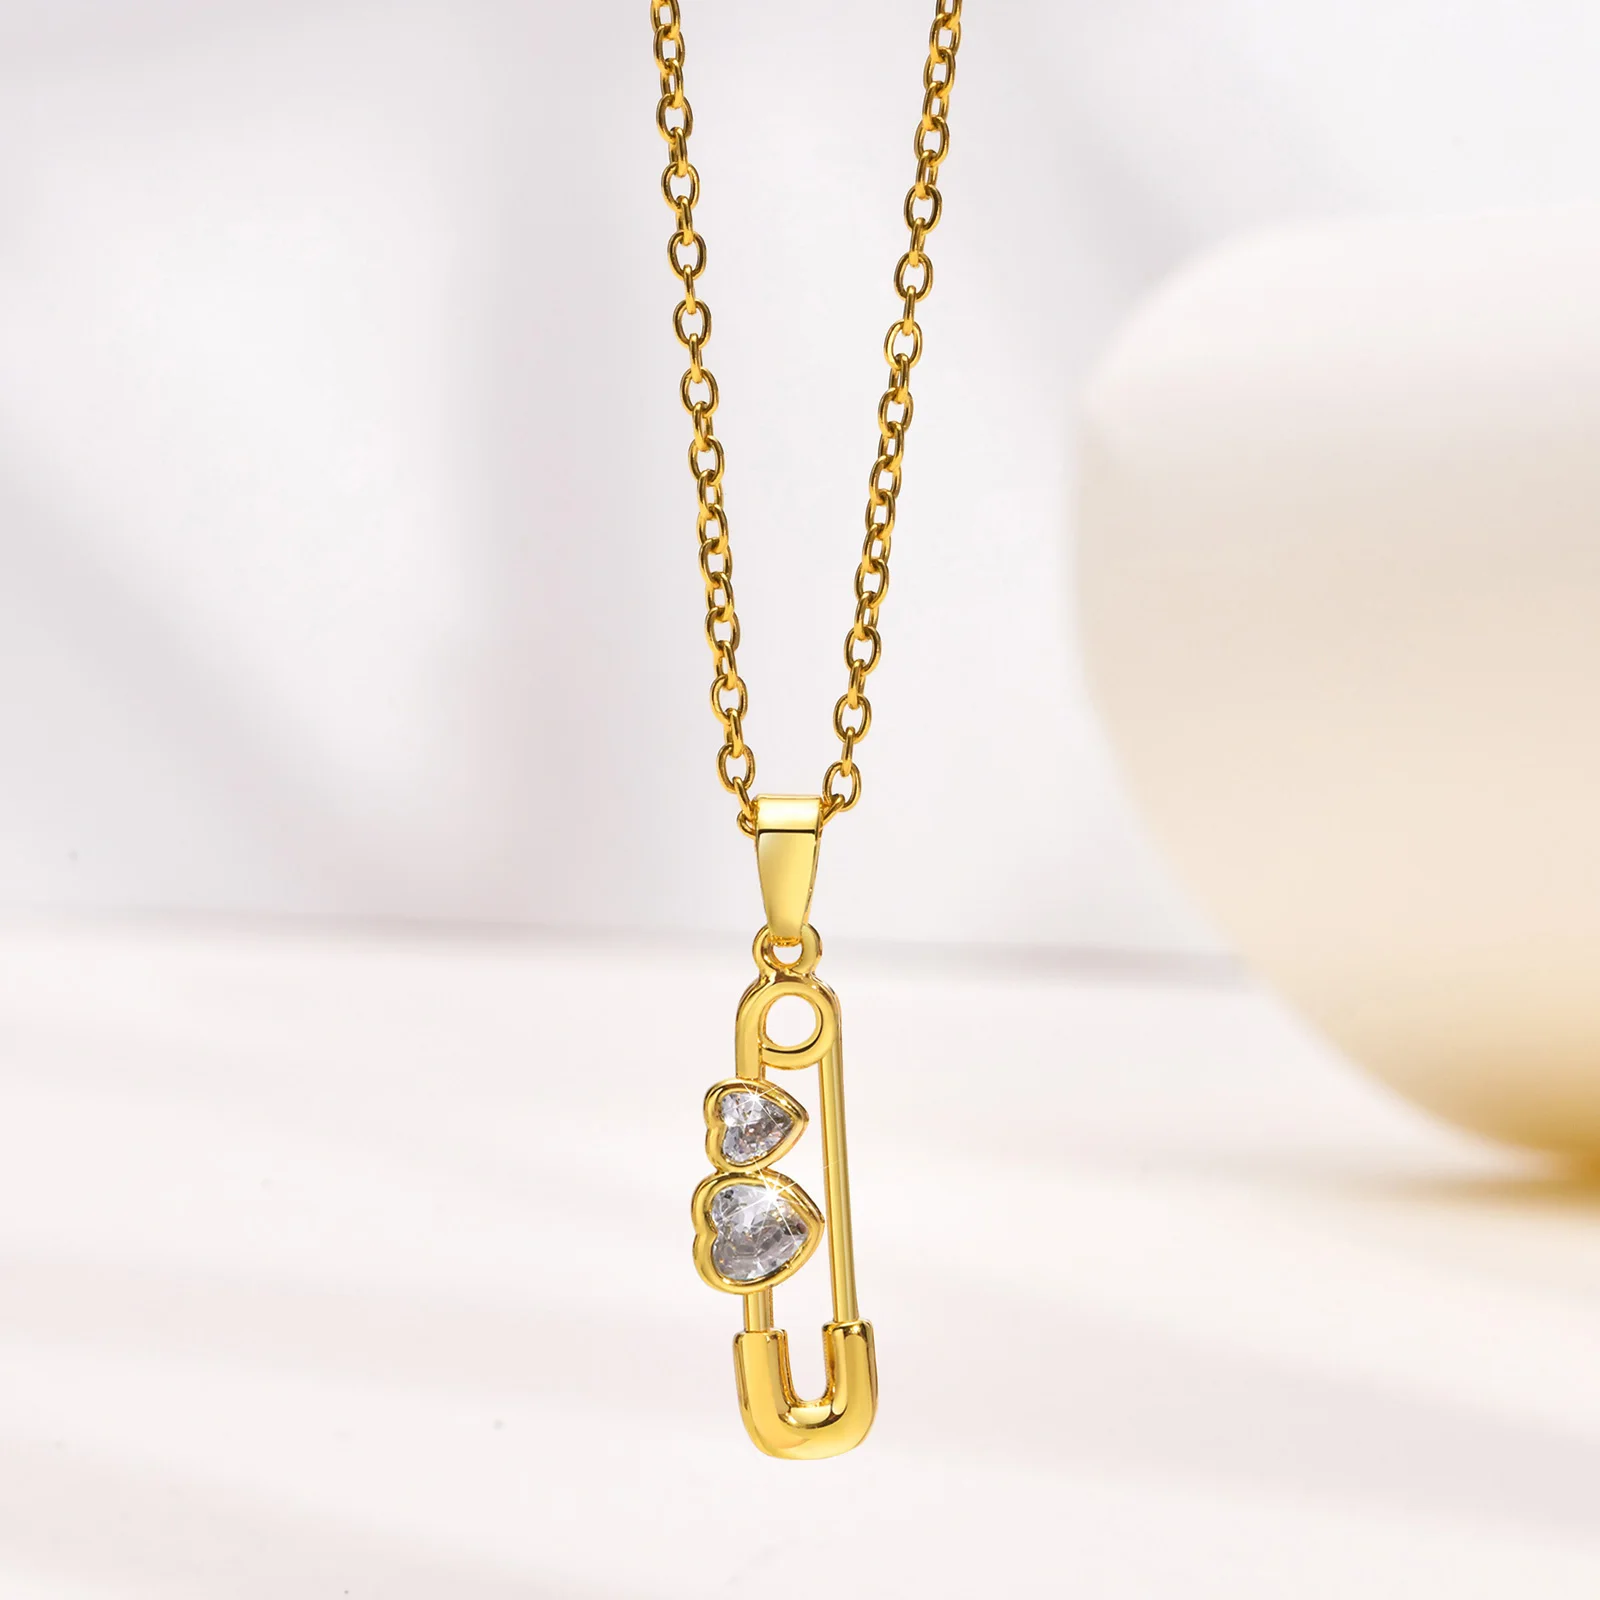 Vnox נשים Pin שרשראות, תכשיטים הלב AAA CZ אבן תליון עם מתכווננת או שרשרת, אלגנטי, מעודן פלדת אל-חלד הצוואר קולר